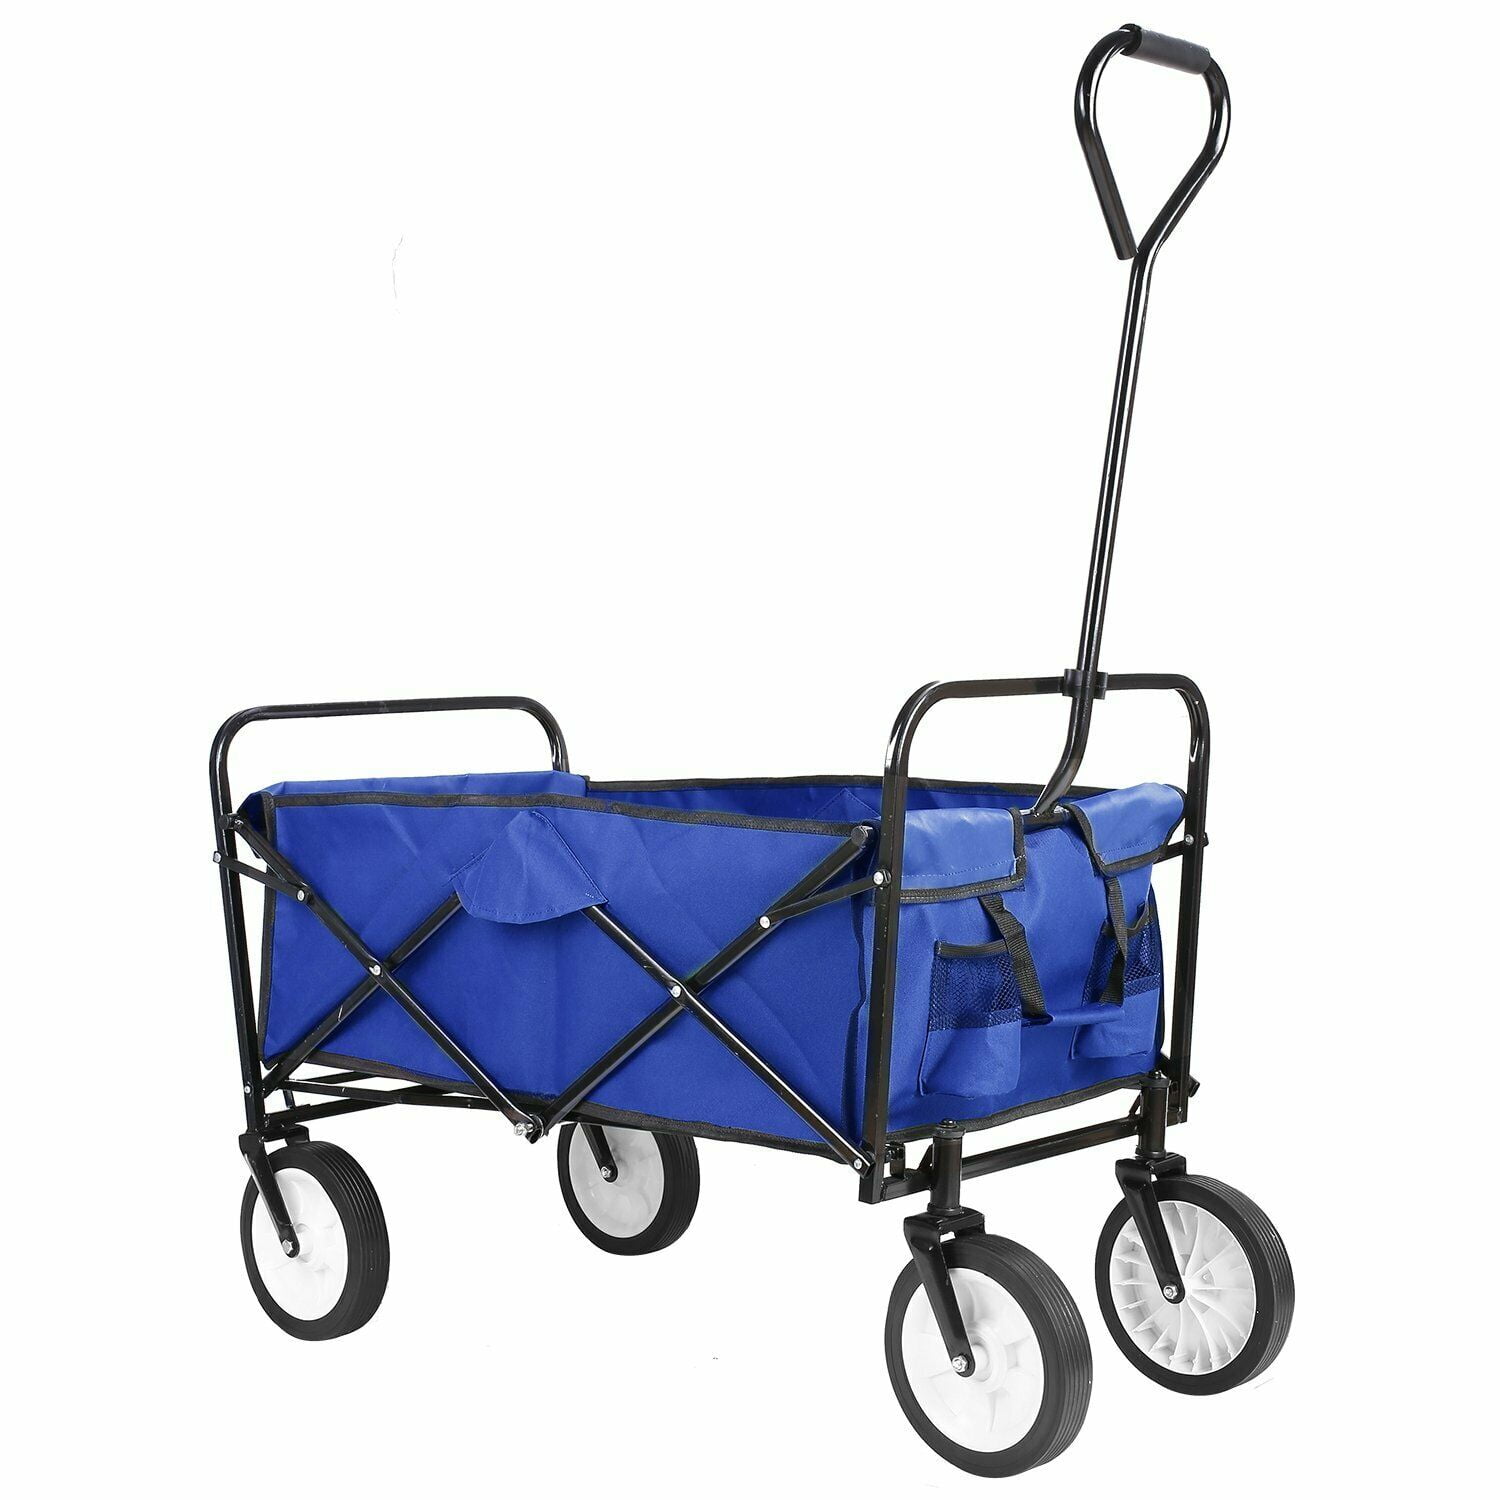 OKVAC Collapsible Utility Wagon Folding Outdoor Cart Trolley - Walmart.com